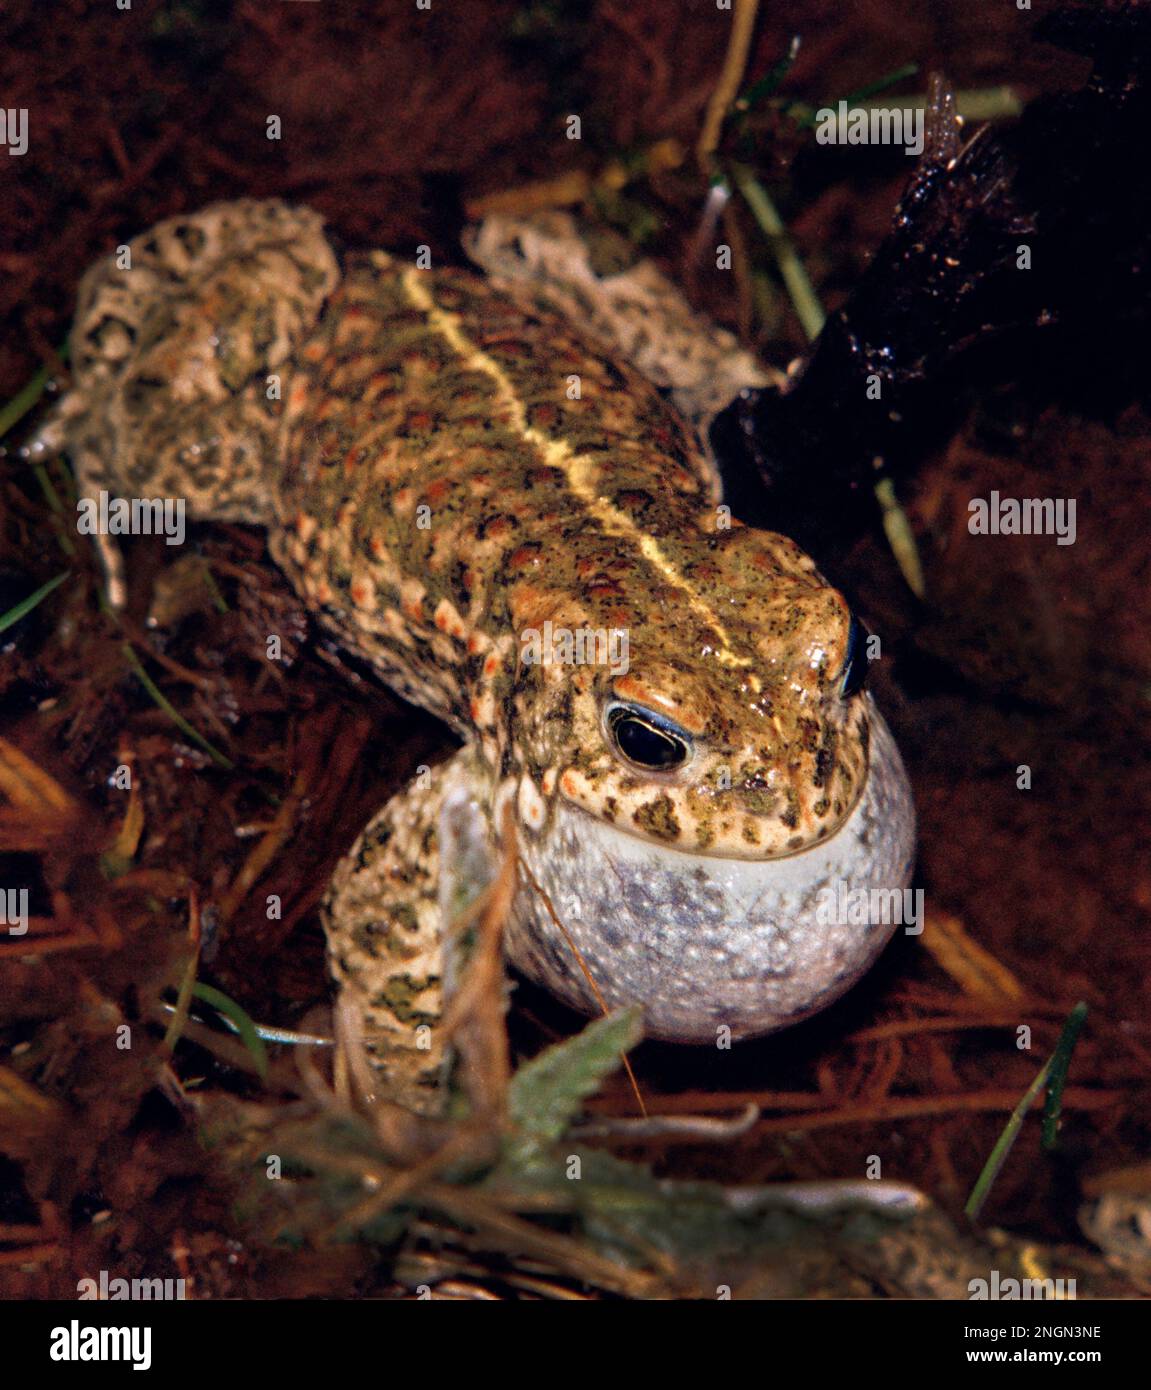 Natterjack toad, Epidalea calamita, formerly Bufo calamita. Mating season. Stock Photo